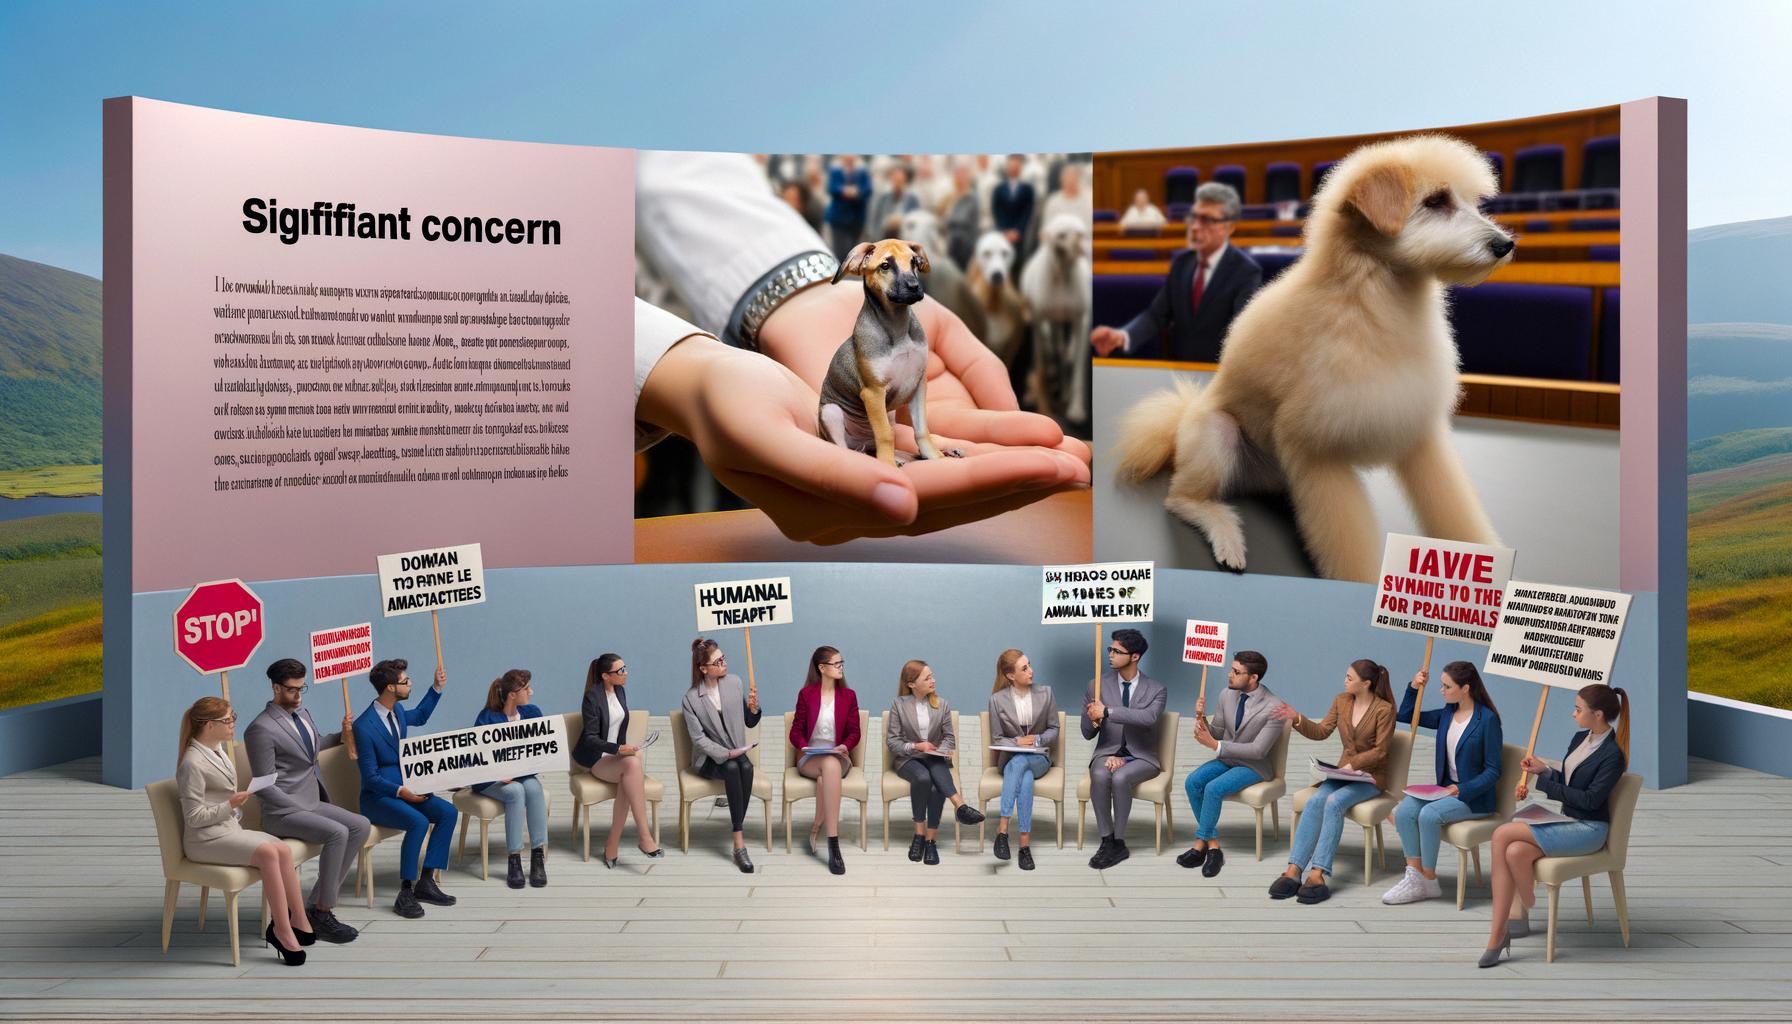 Animal welfare concerns lead to public outcry